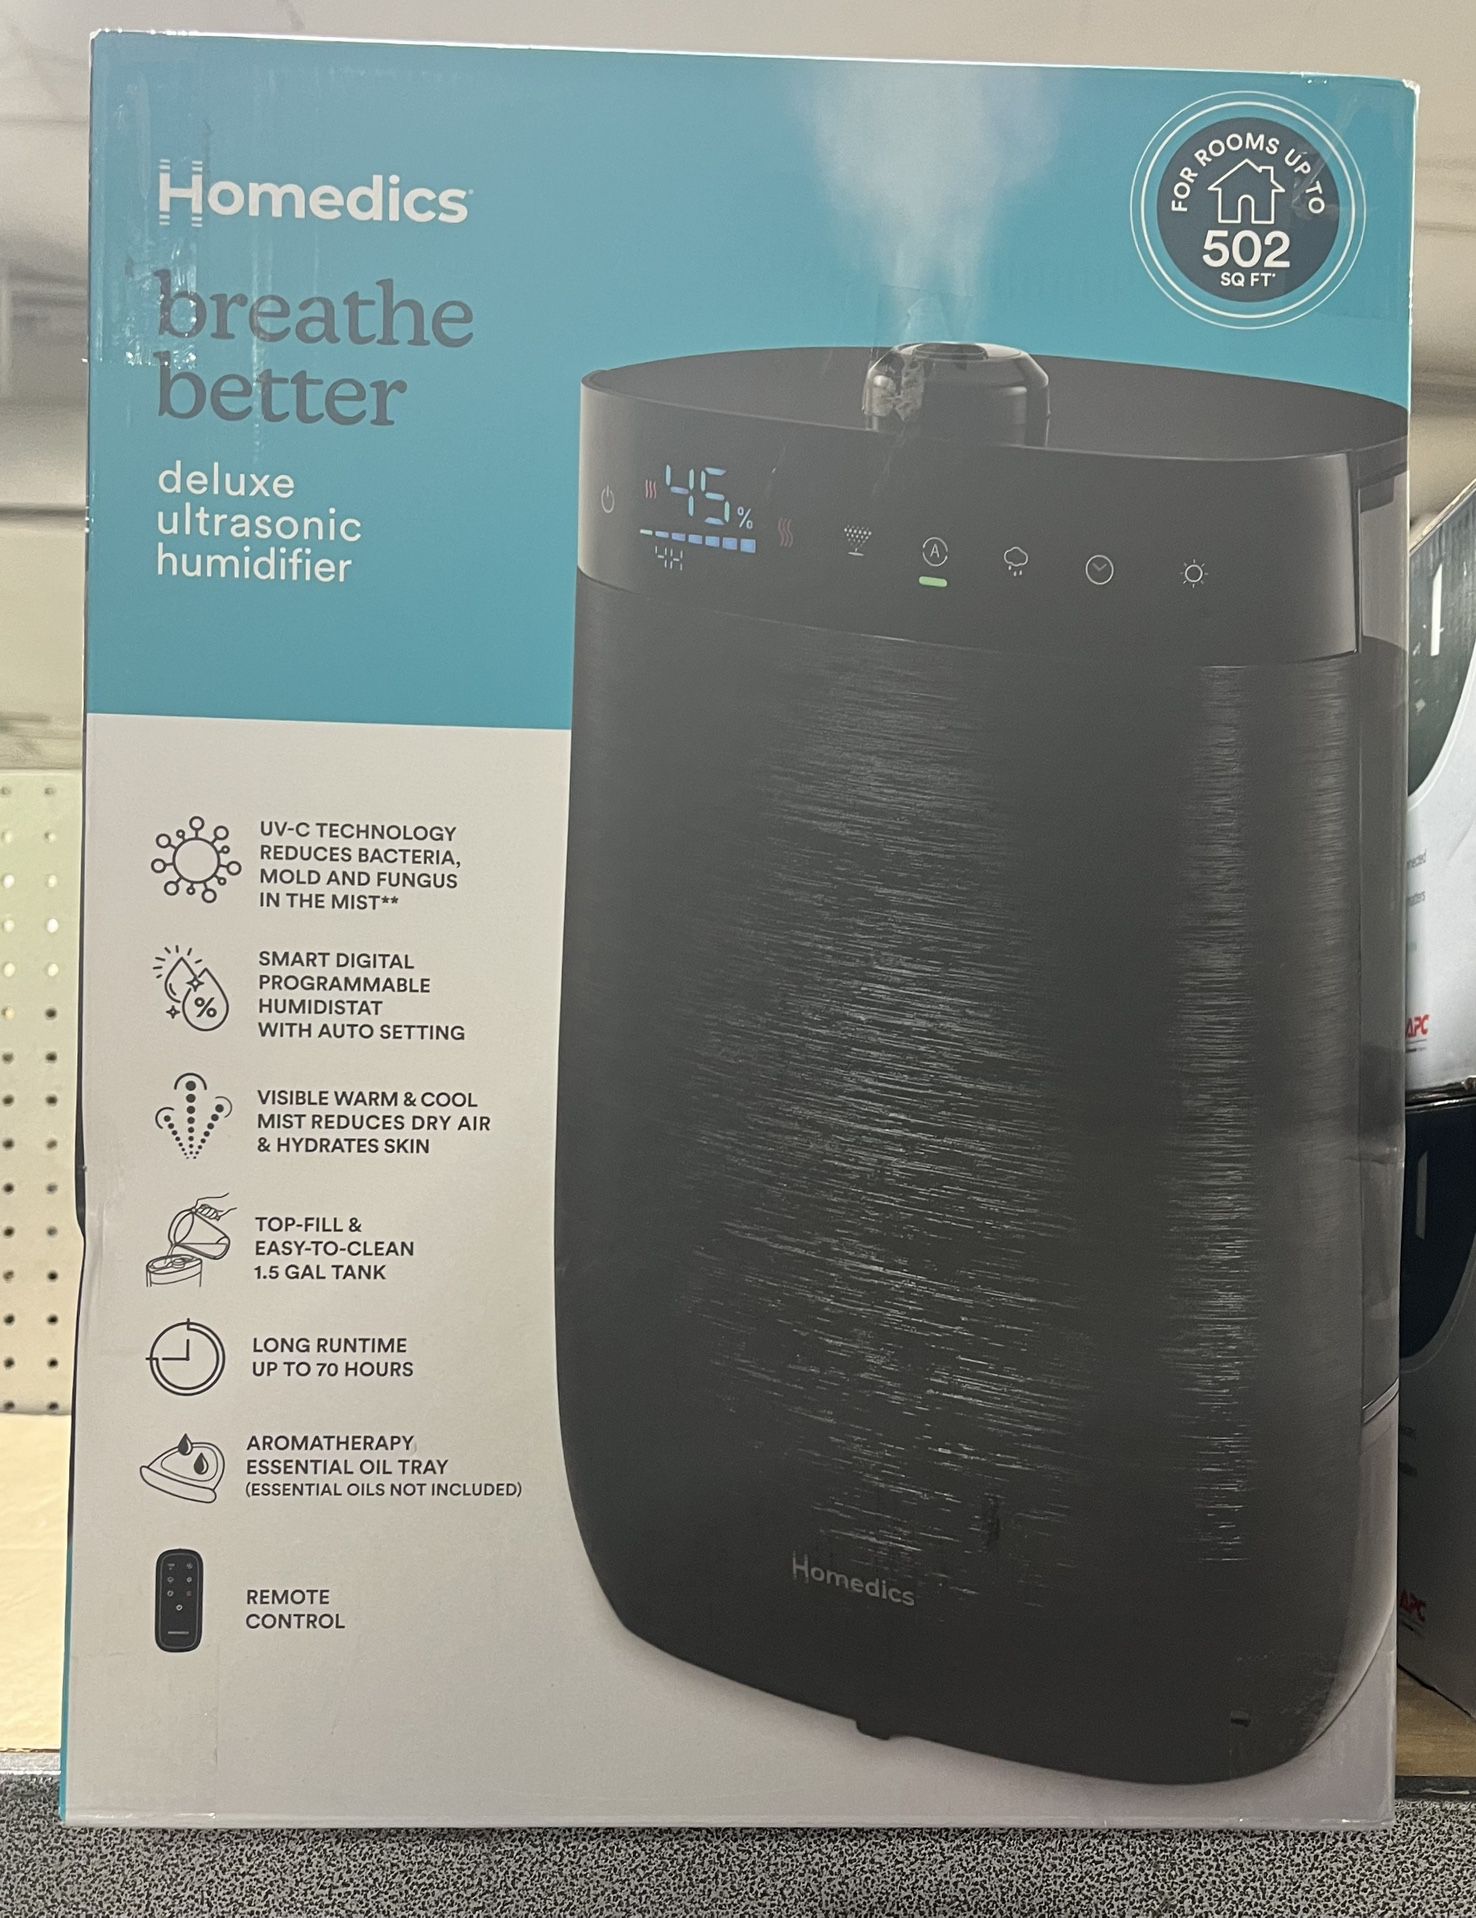 Homedics breathe better deluxe ultrasonic humidifier $49.99